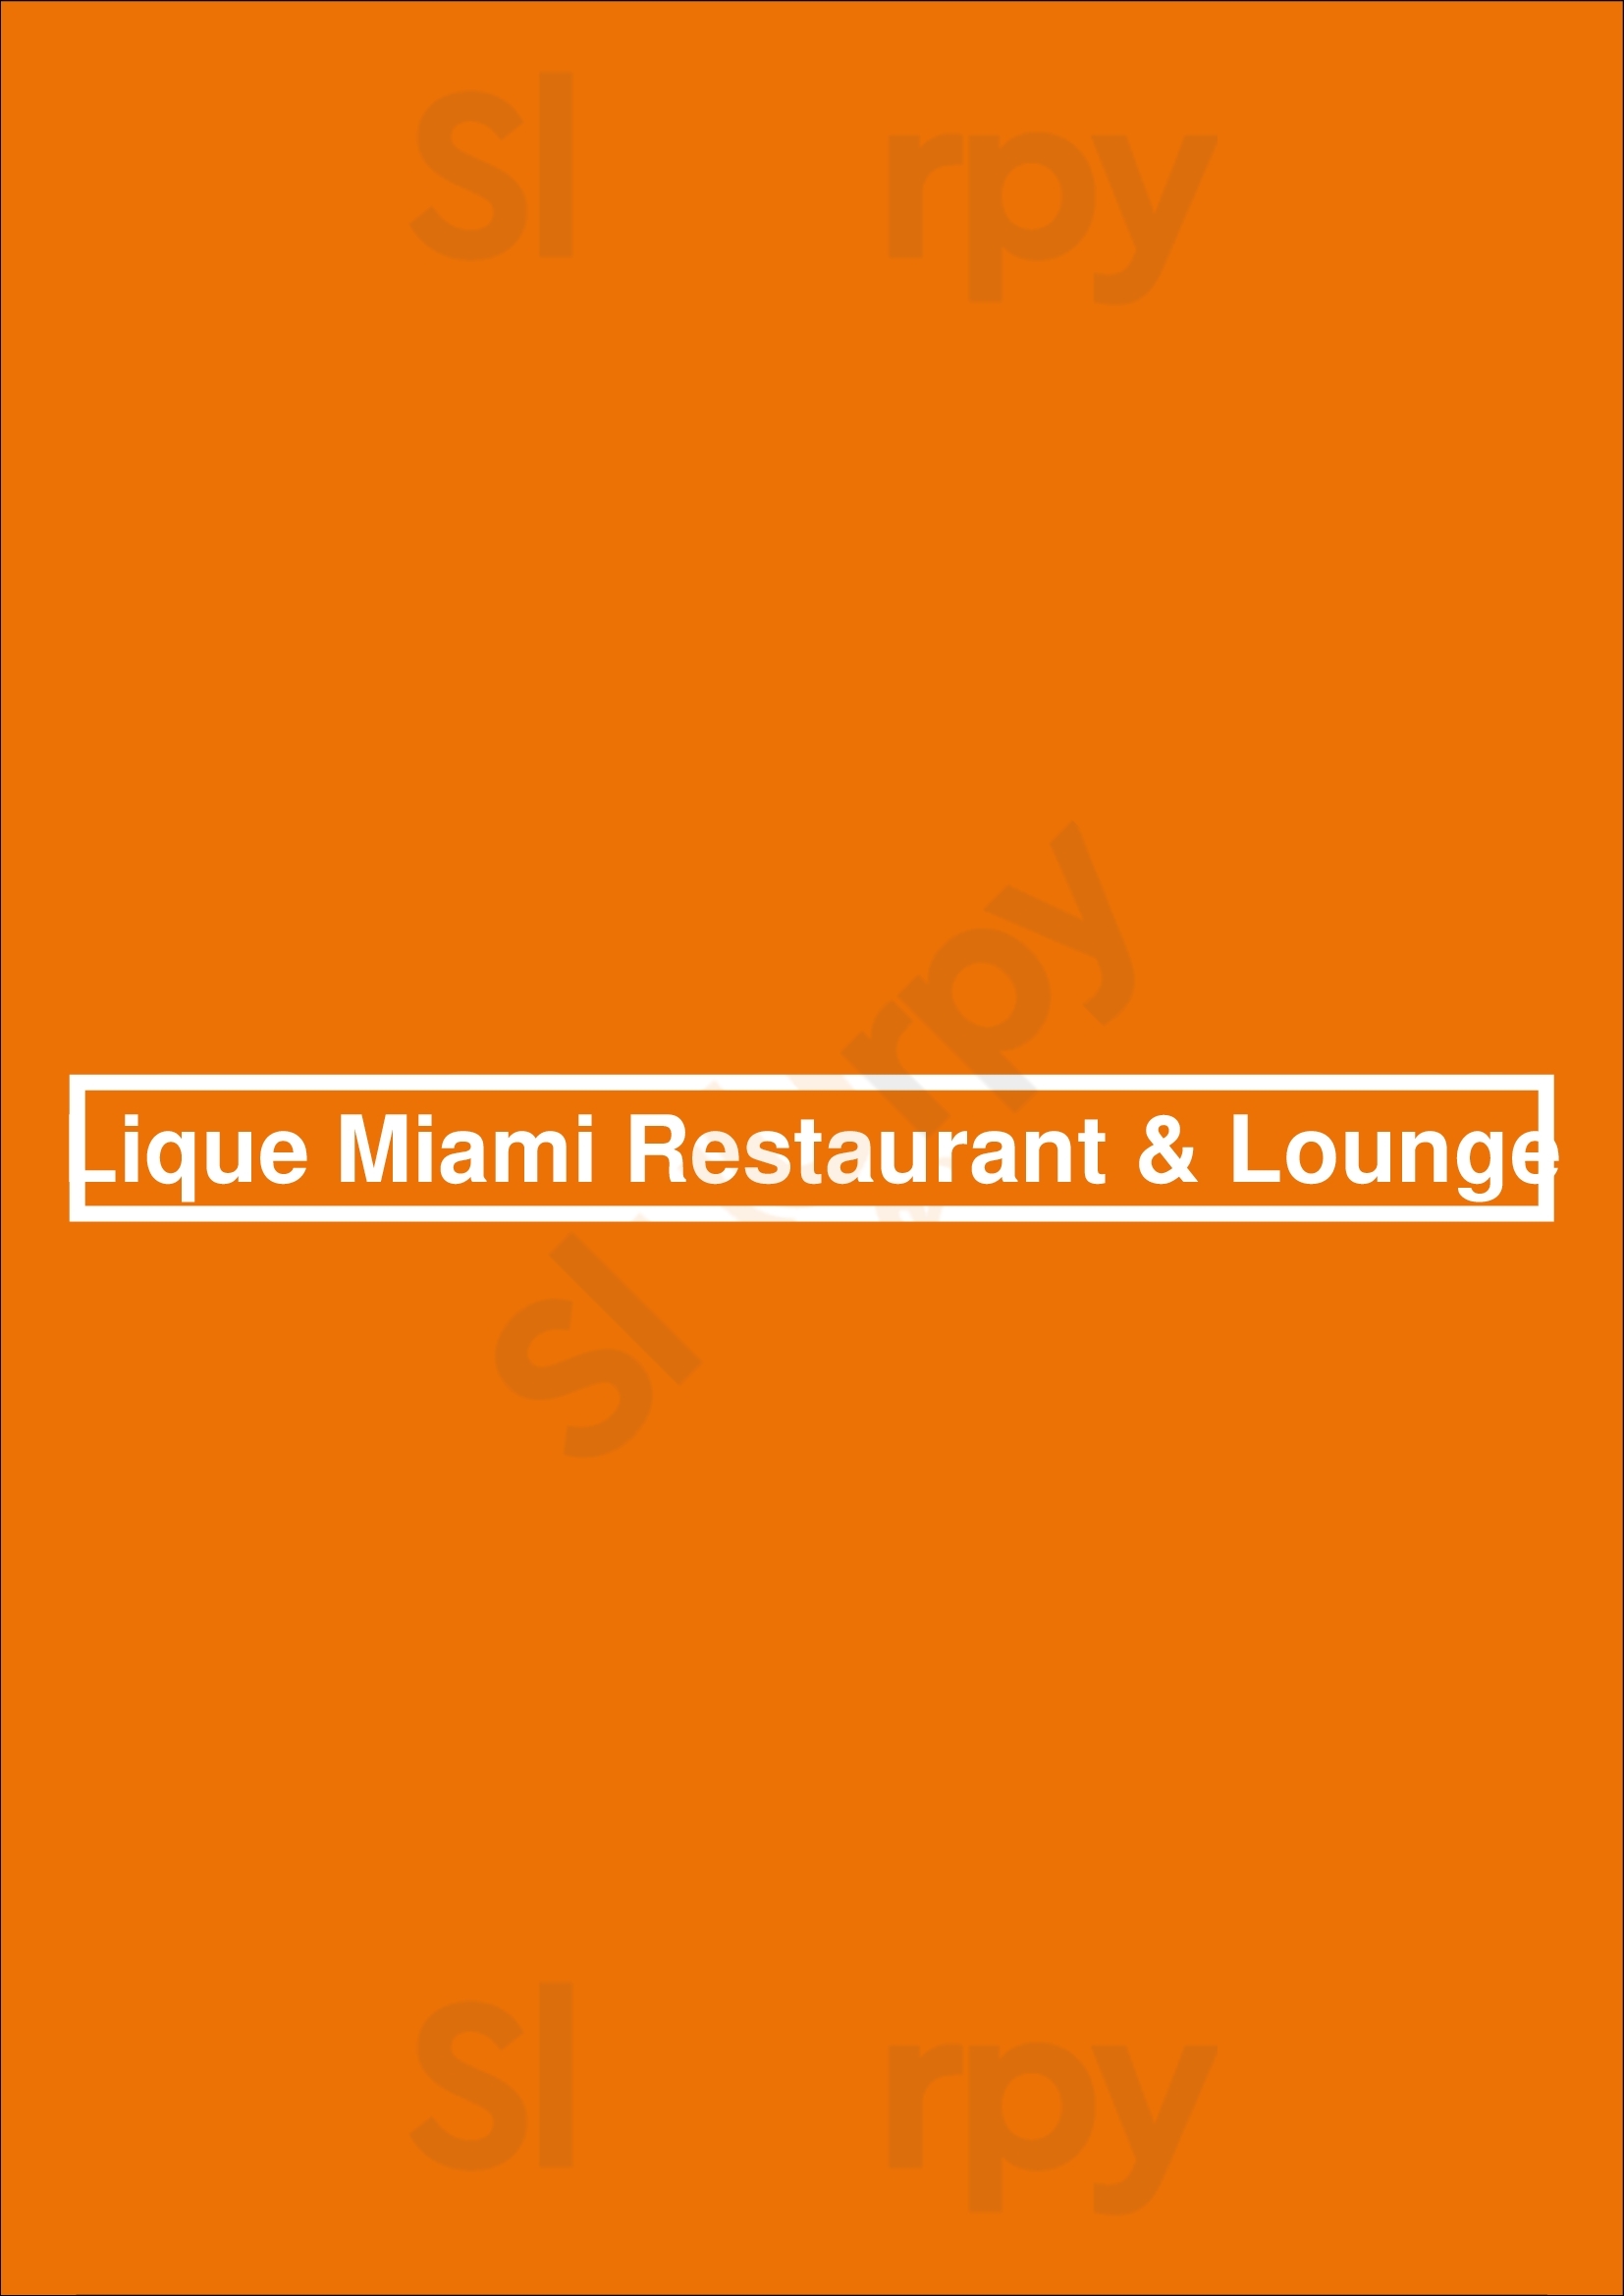 Lique Miami Restaurant & Lounge Miami Menu - 1